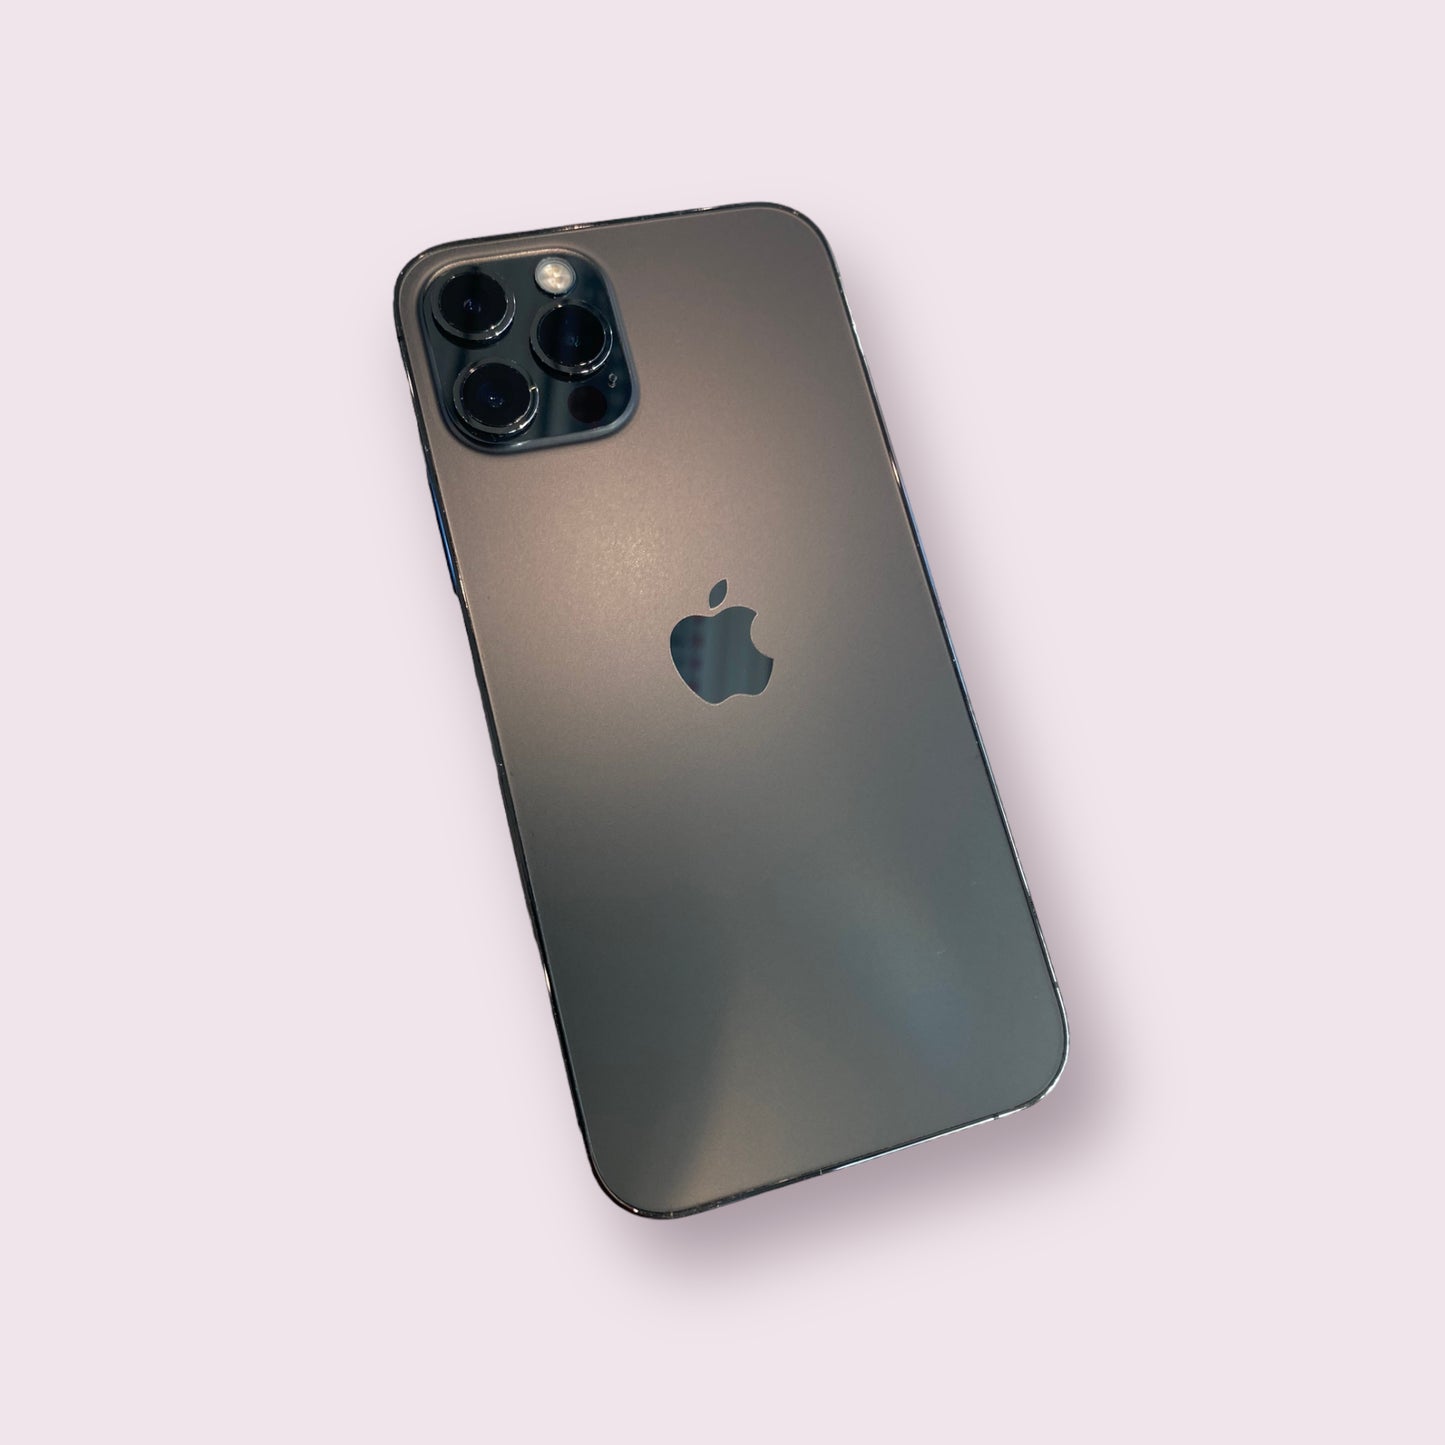 Apple iPhone 12 Pro 128GB Graphite - Unlocked - Grade B